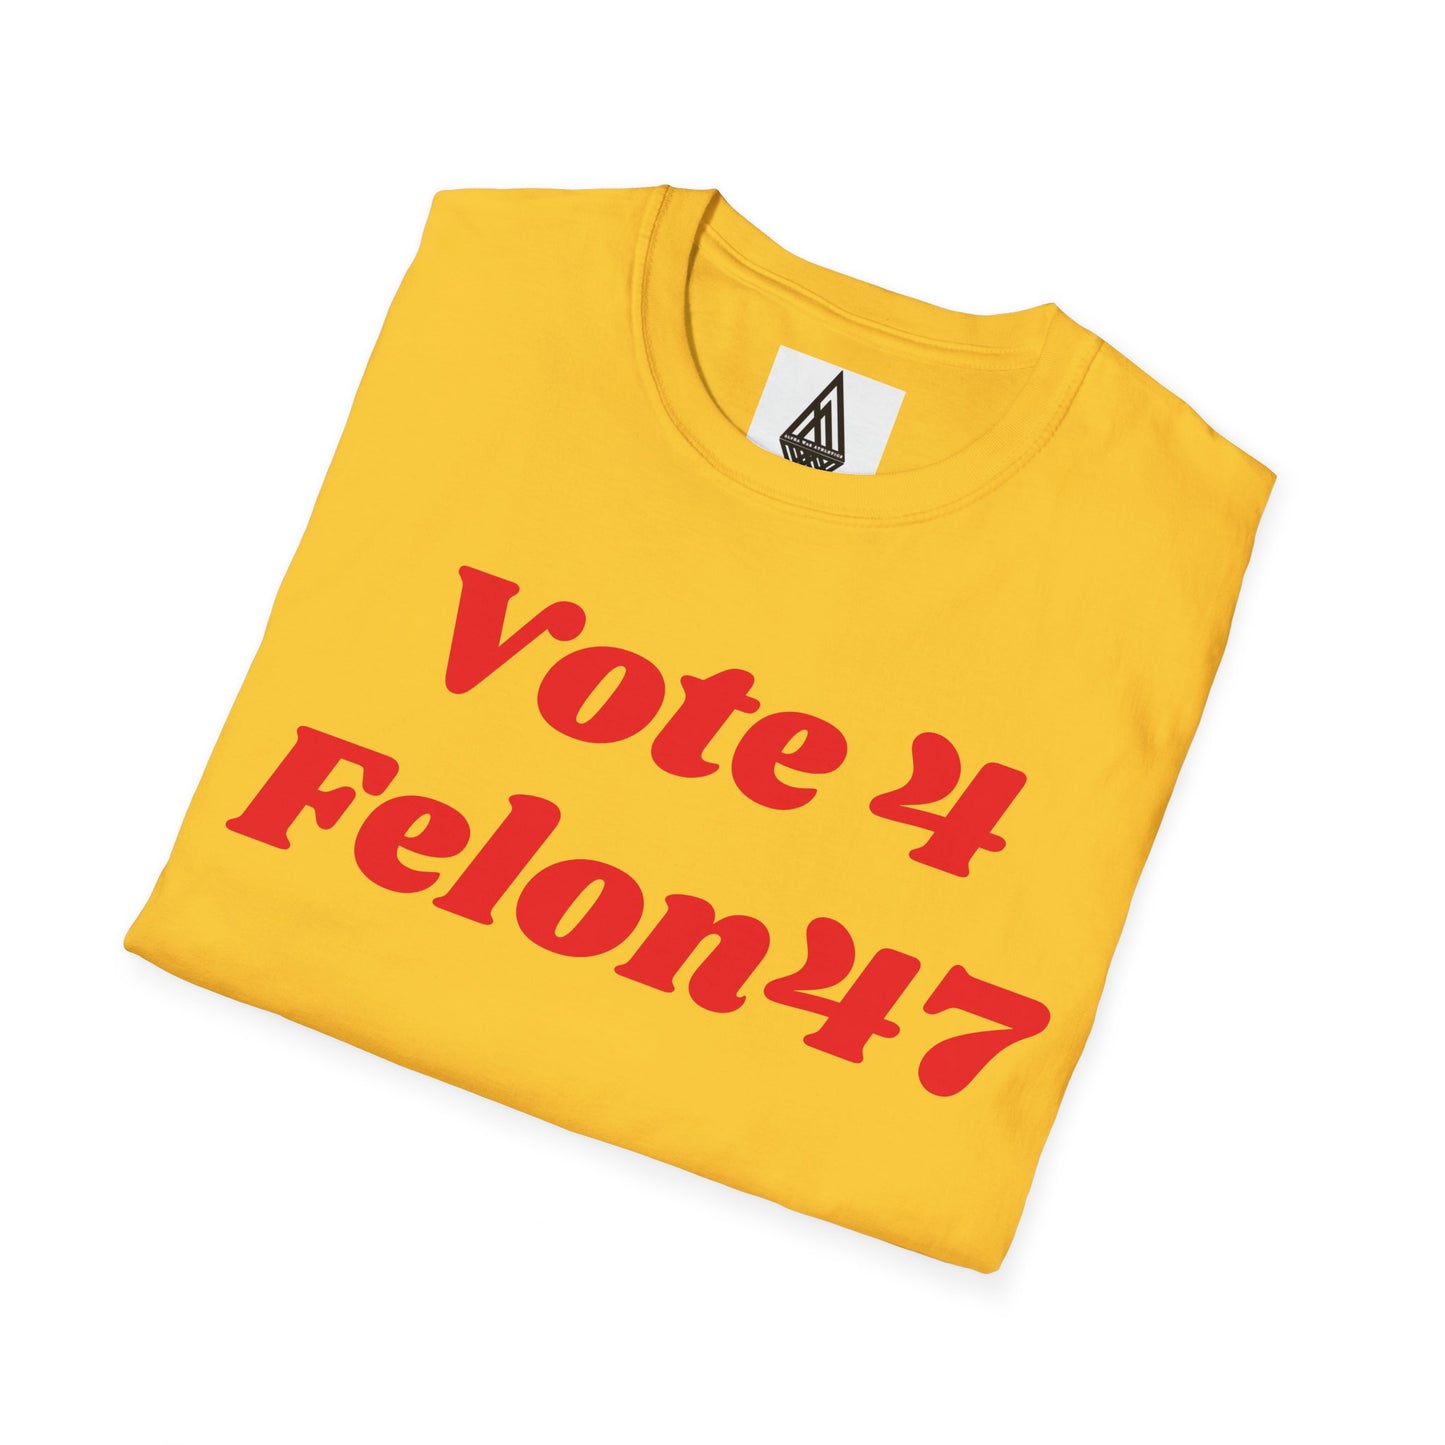 #felon47 T-Shirt